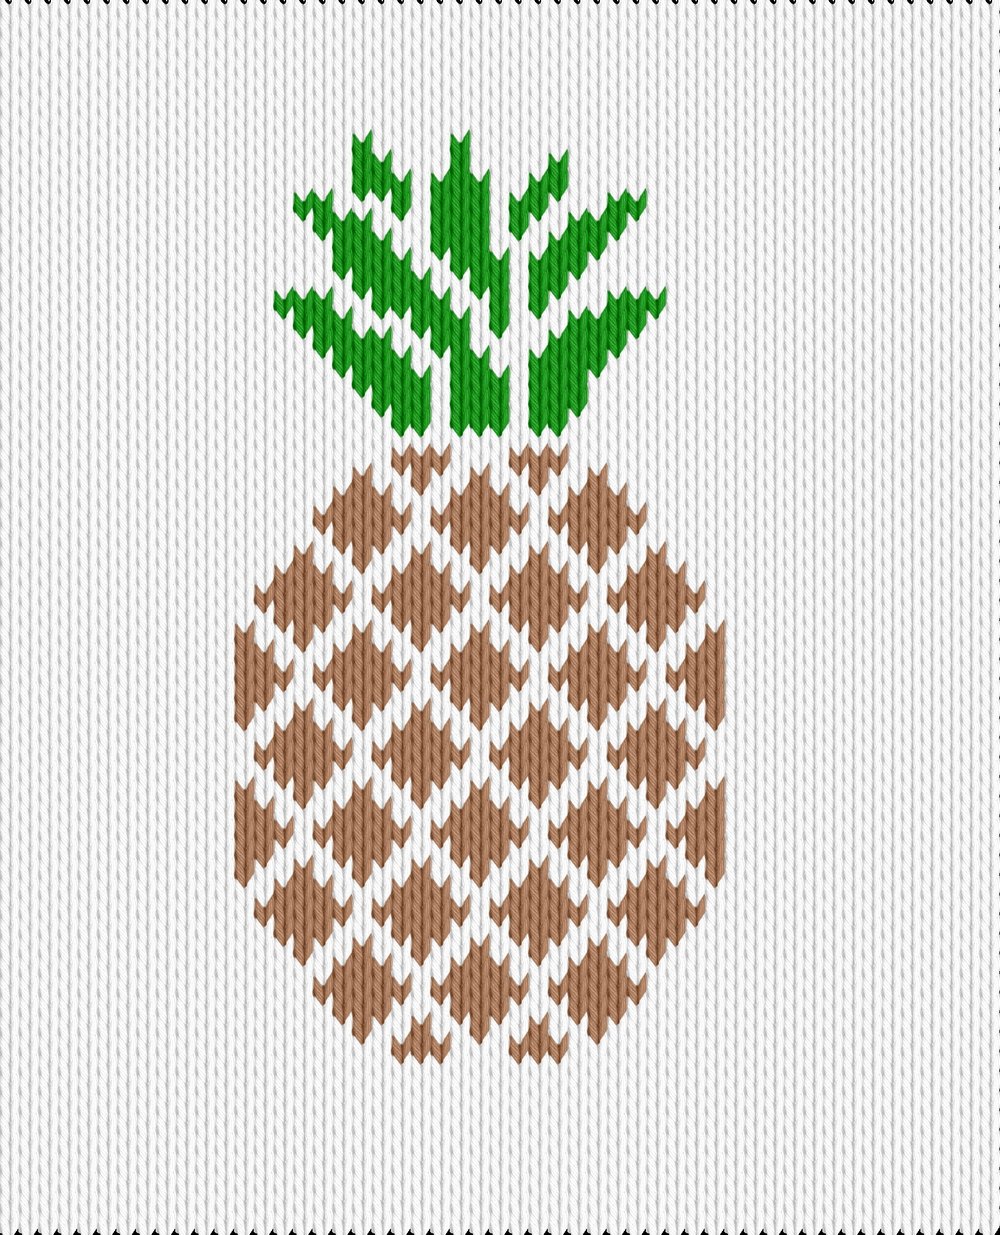 Knitting motif chart, pineapple